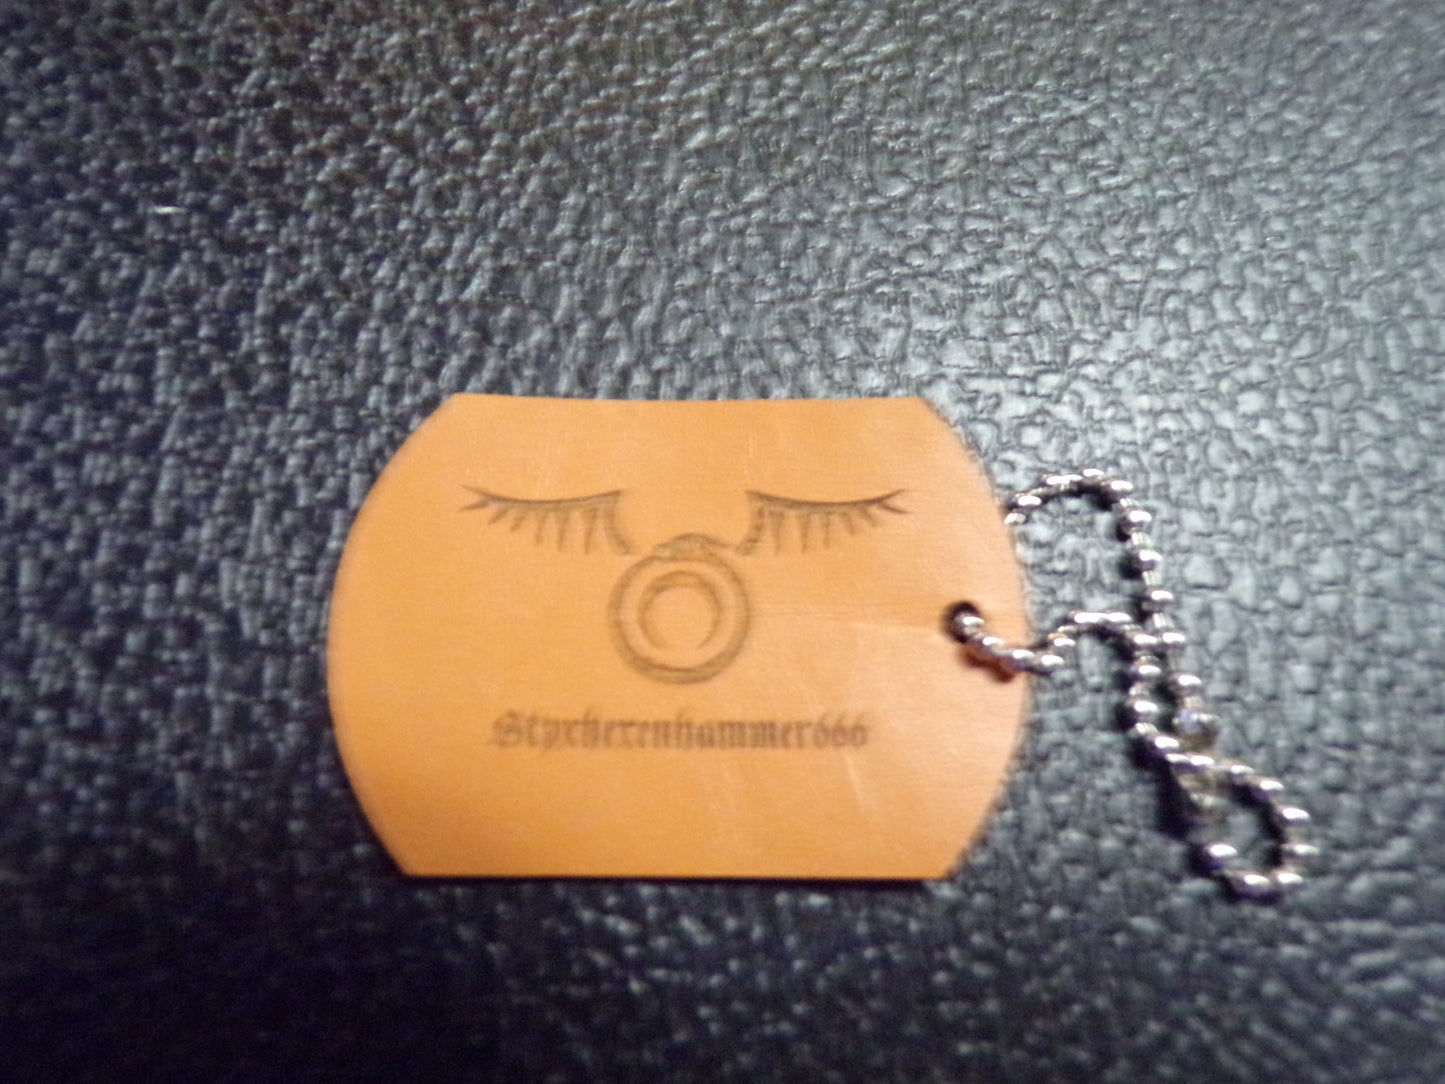 Styx Dog Tag Keychain Orange Leather Snakeskin backed Ouroboros w/wings